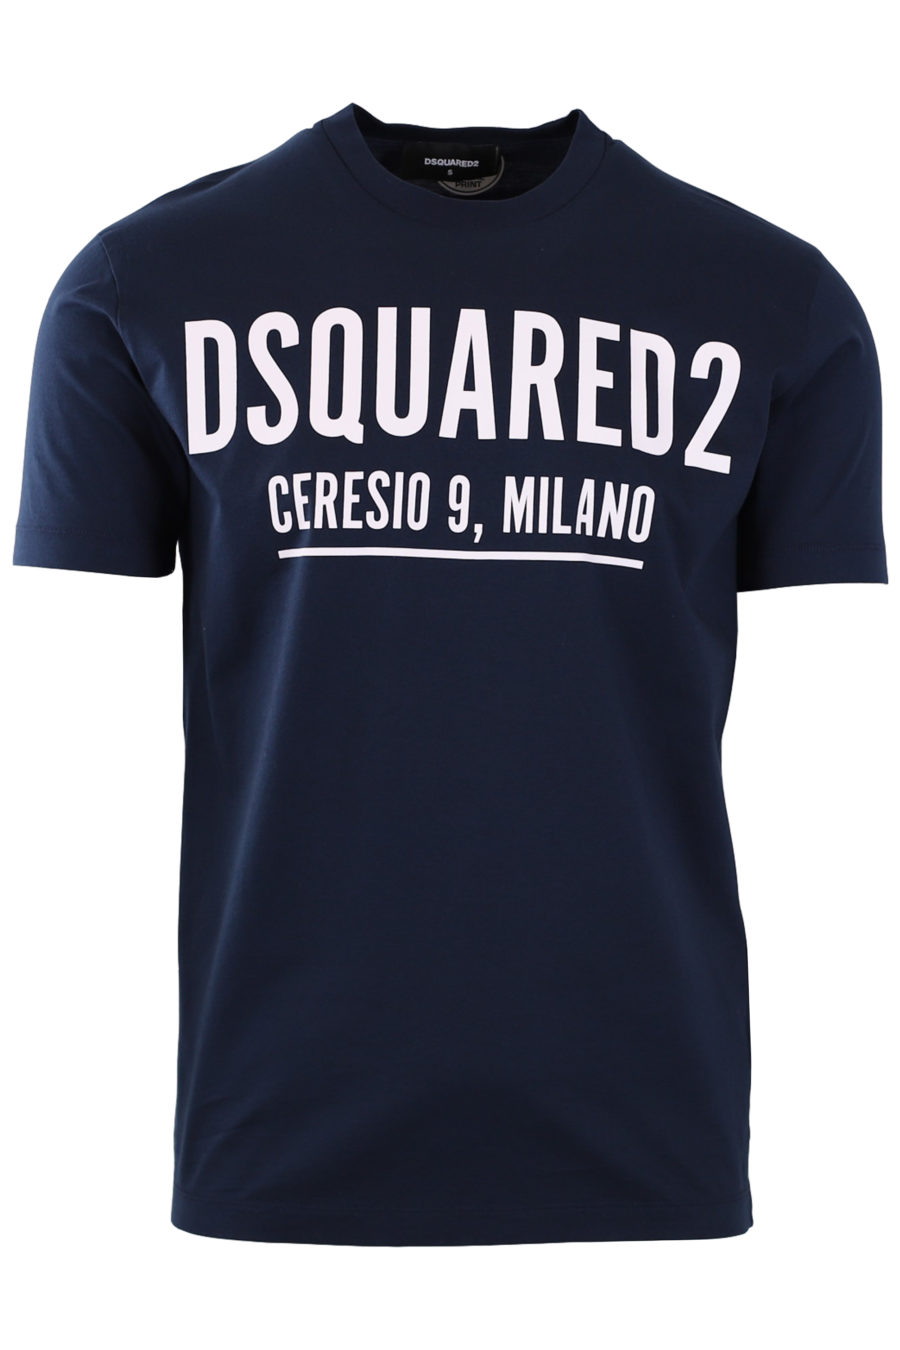 Camiseta azul con estampado blanco "Ceresio 9 Milano" - d552c6739968ca1e4bcd272dcff11202a3f6c60f